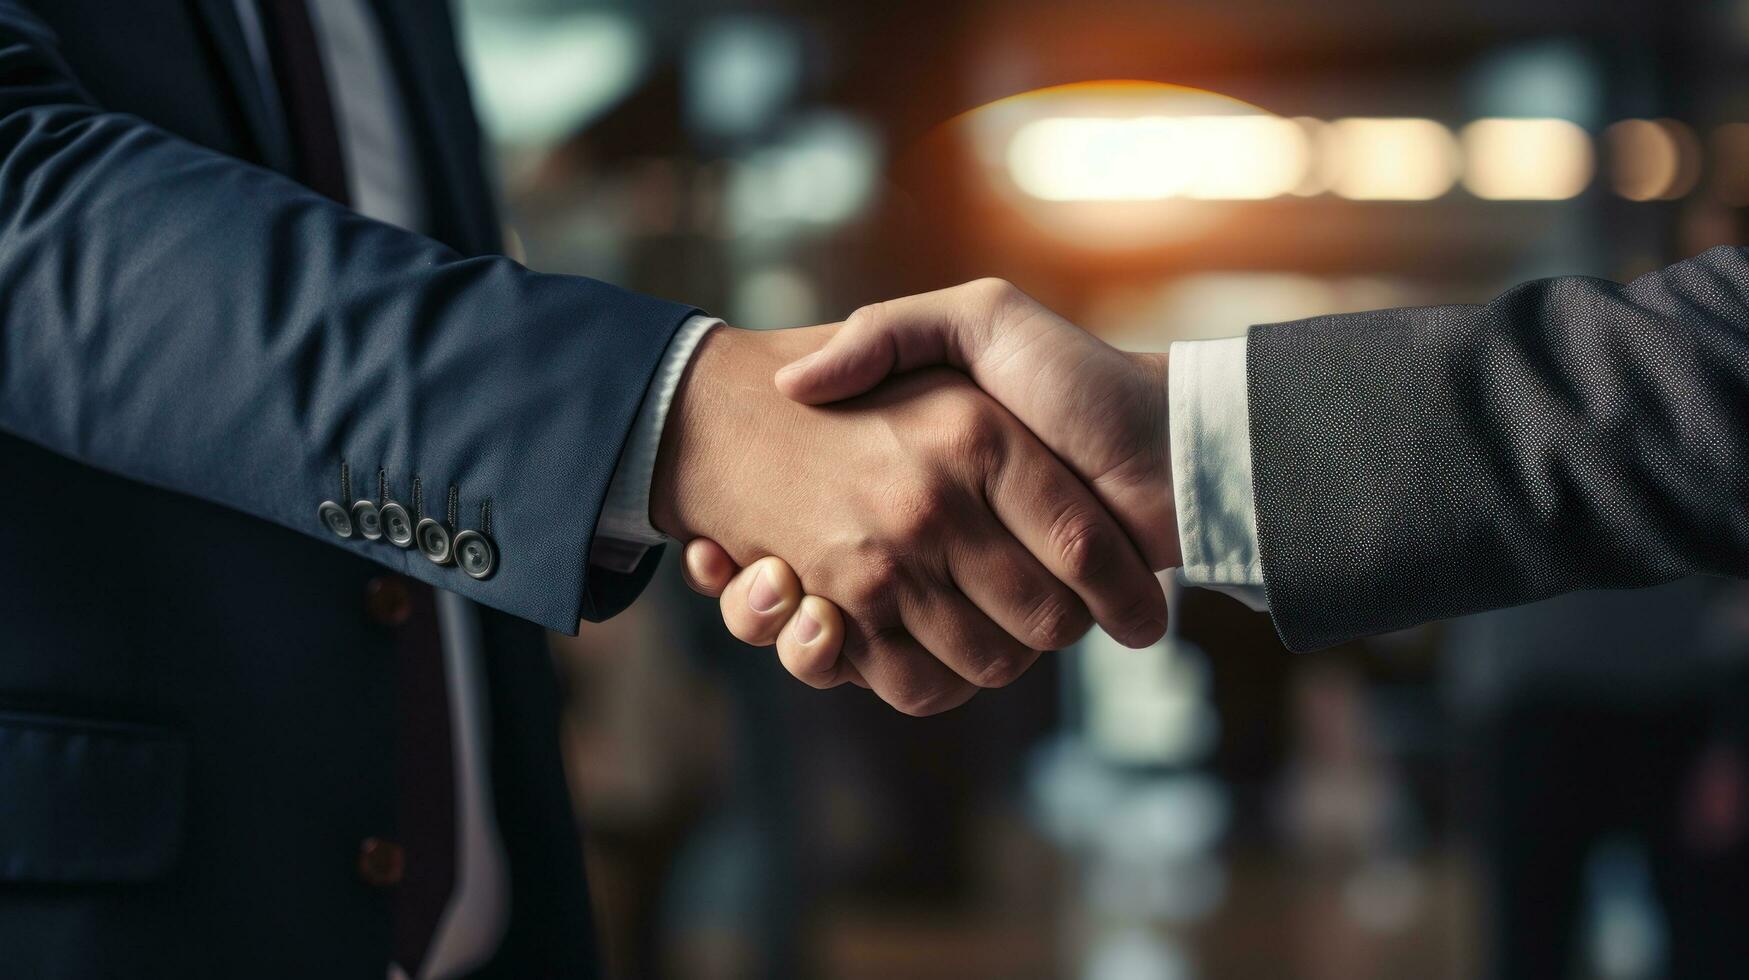 Networking Handshake between two professionals in suits photo